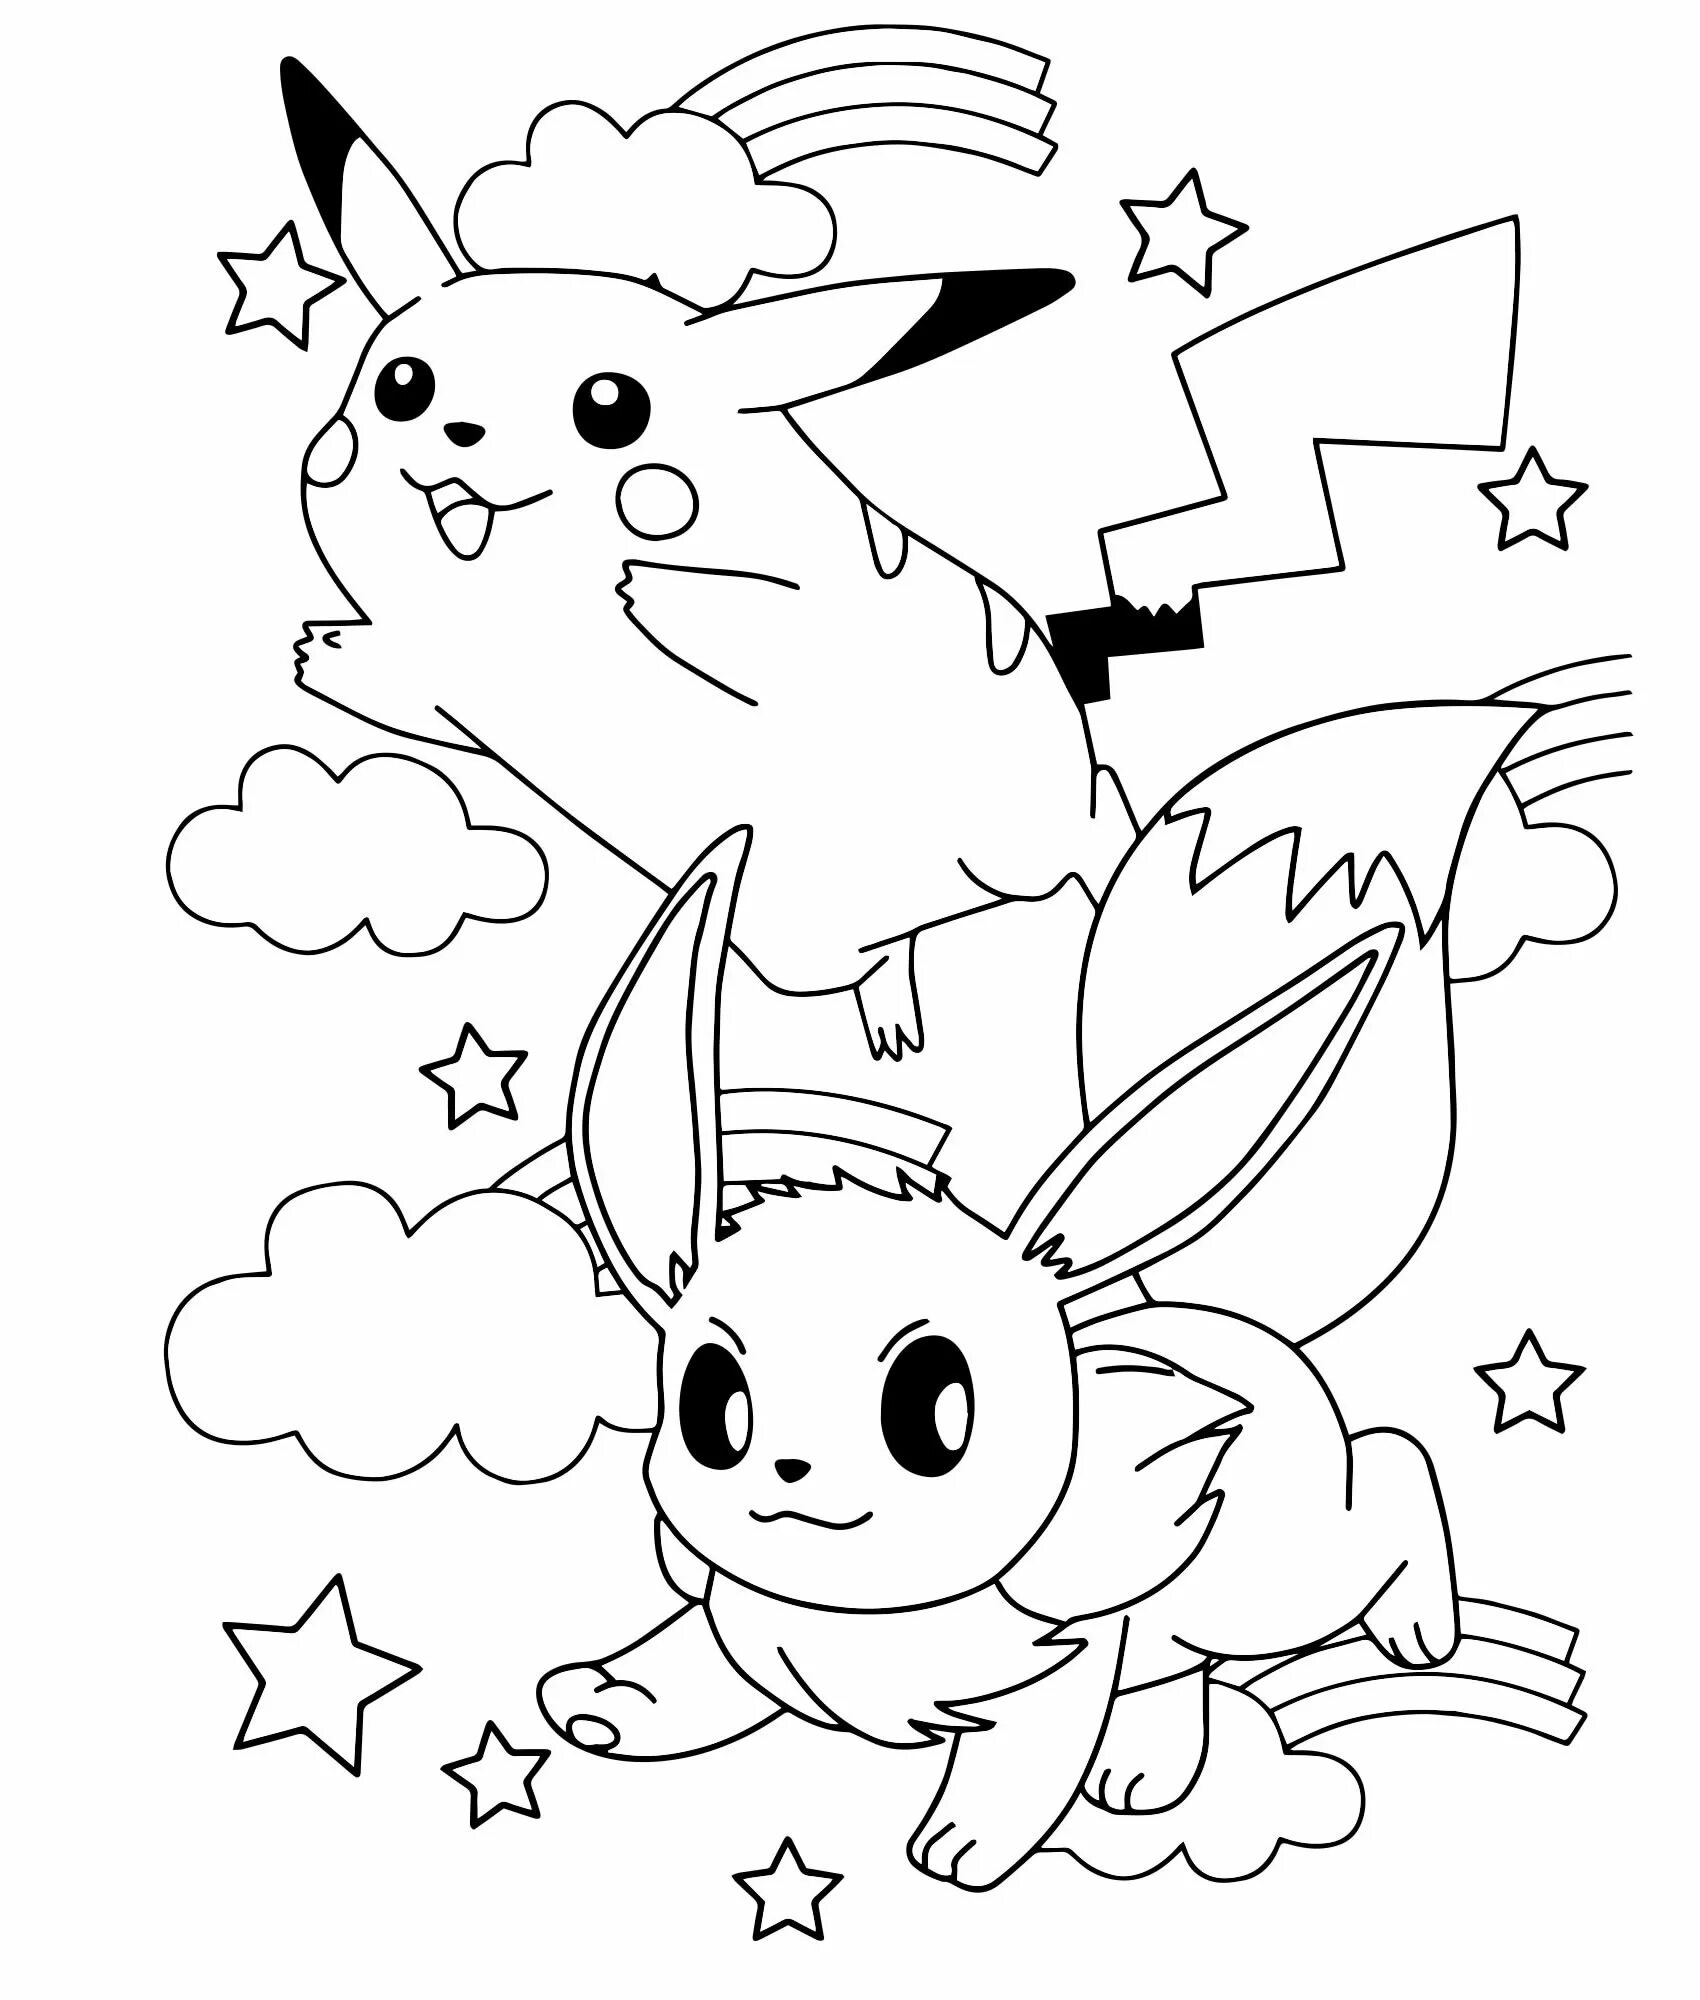 Pikachu print #1